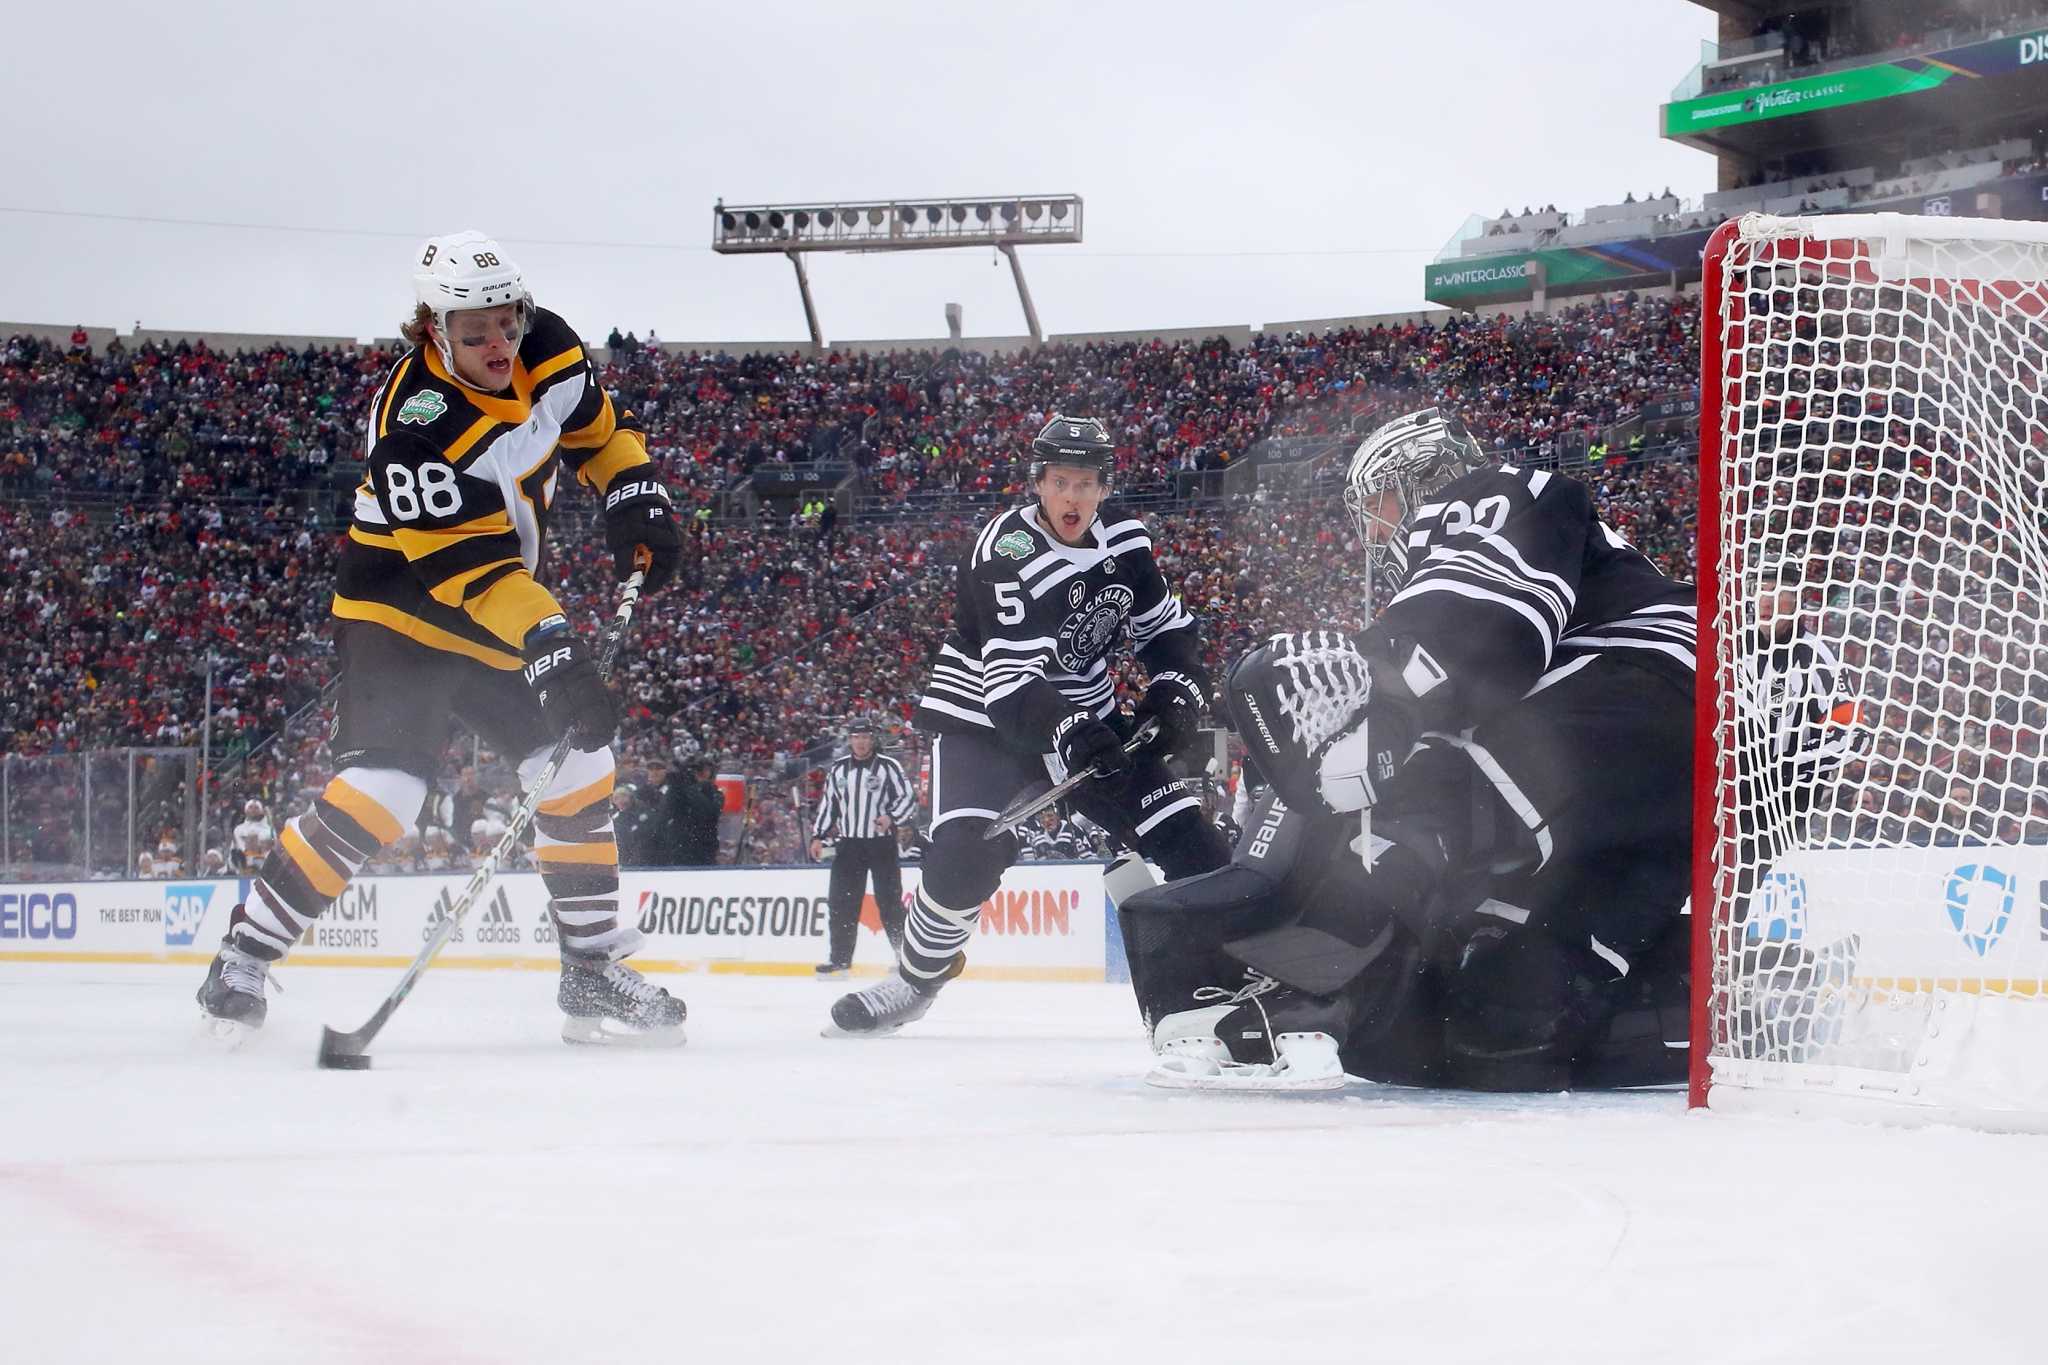 NHL Winter Classic: David Pastrnak, Bruins beat Blackhawks 4-2 at